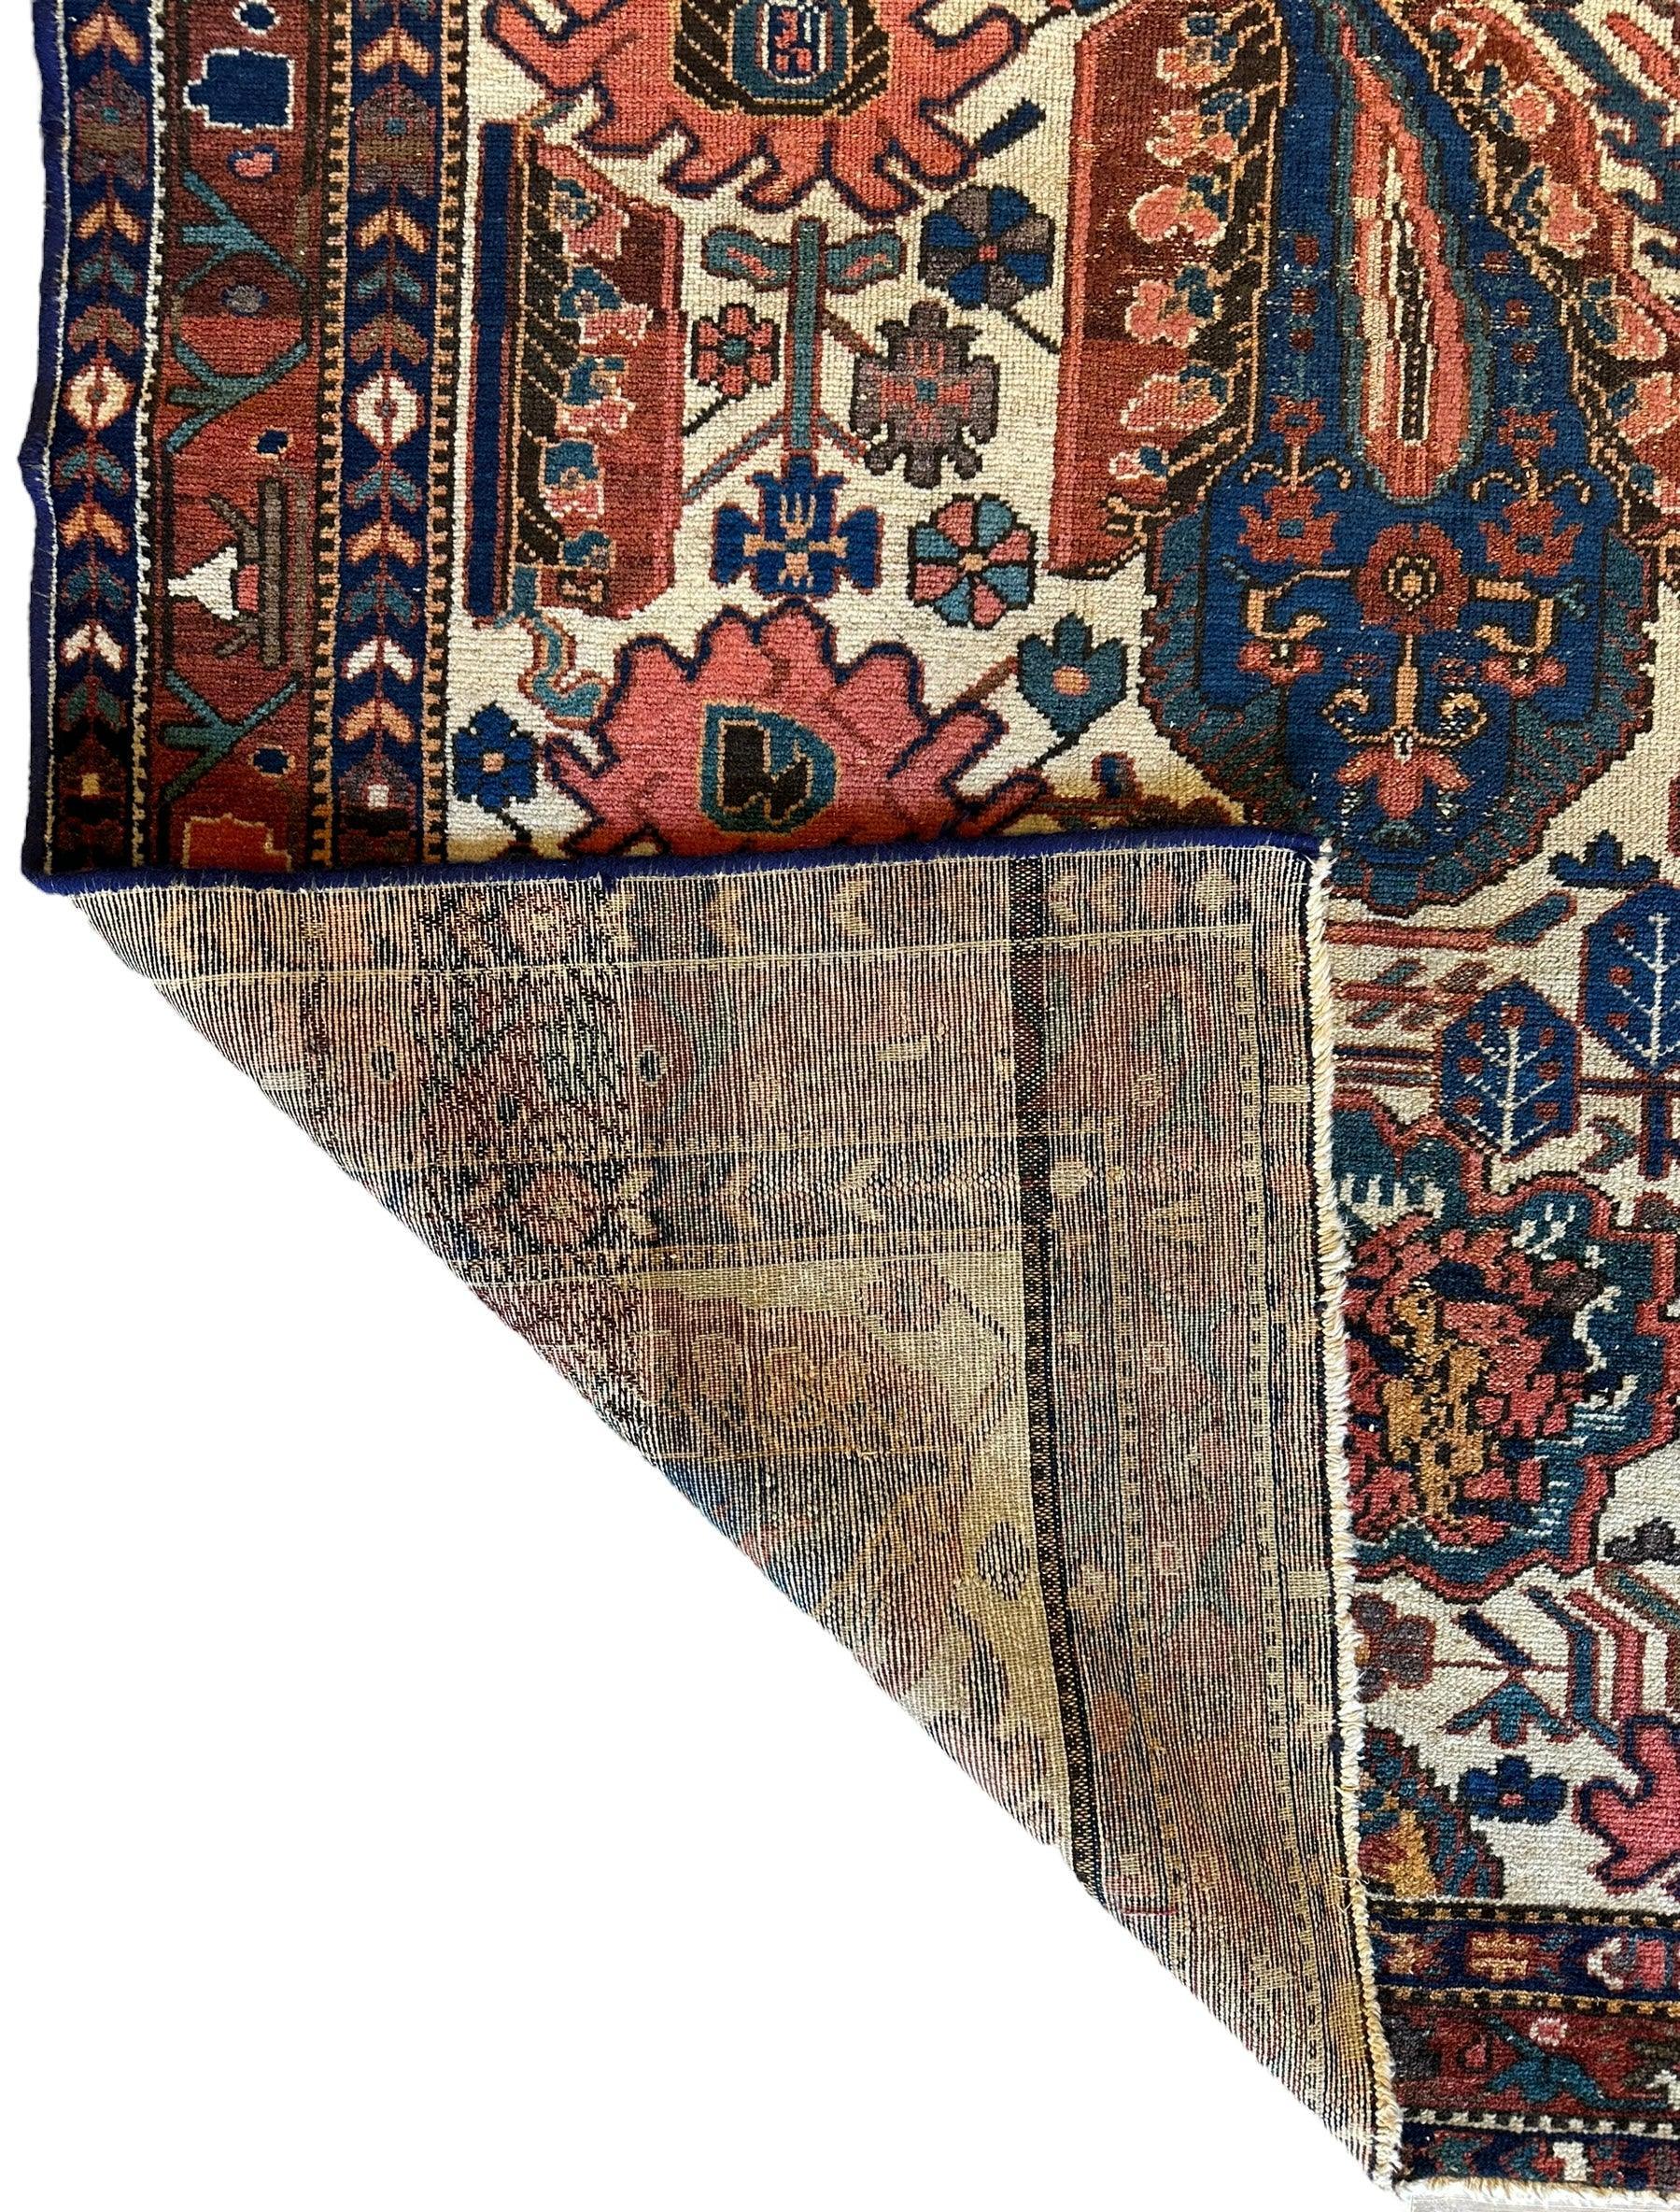 Antique Decorative Bakhtiari rug Circa 1920 Wool on Cotton Foundation 5x7